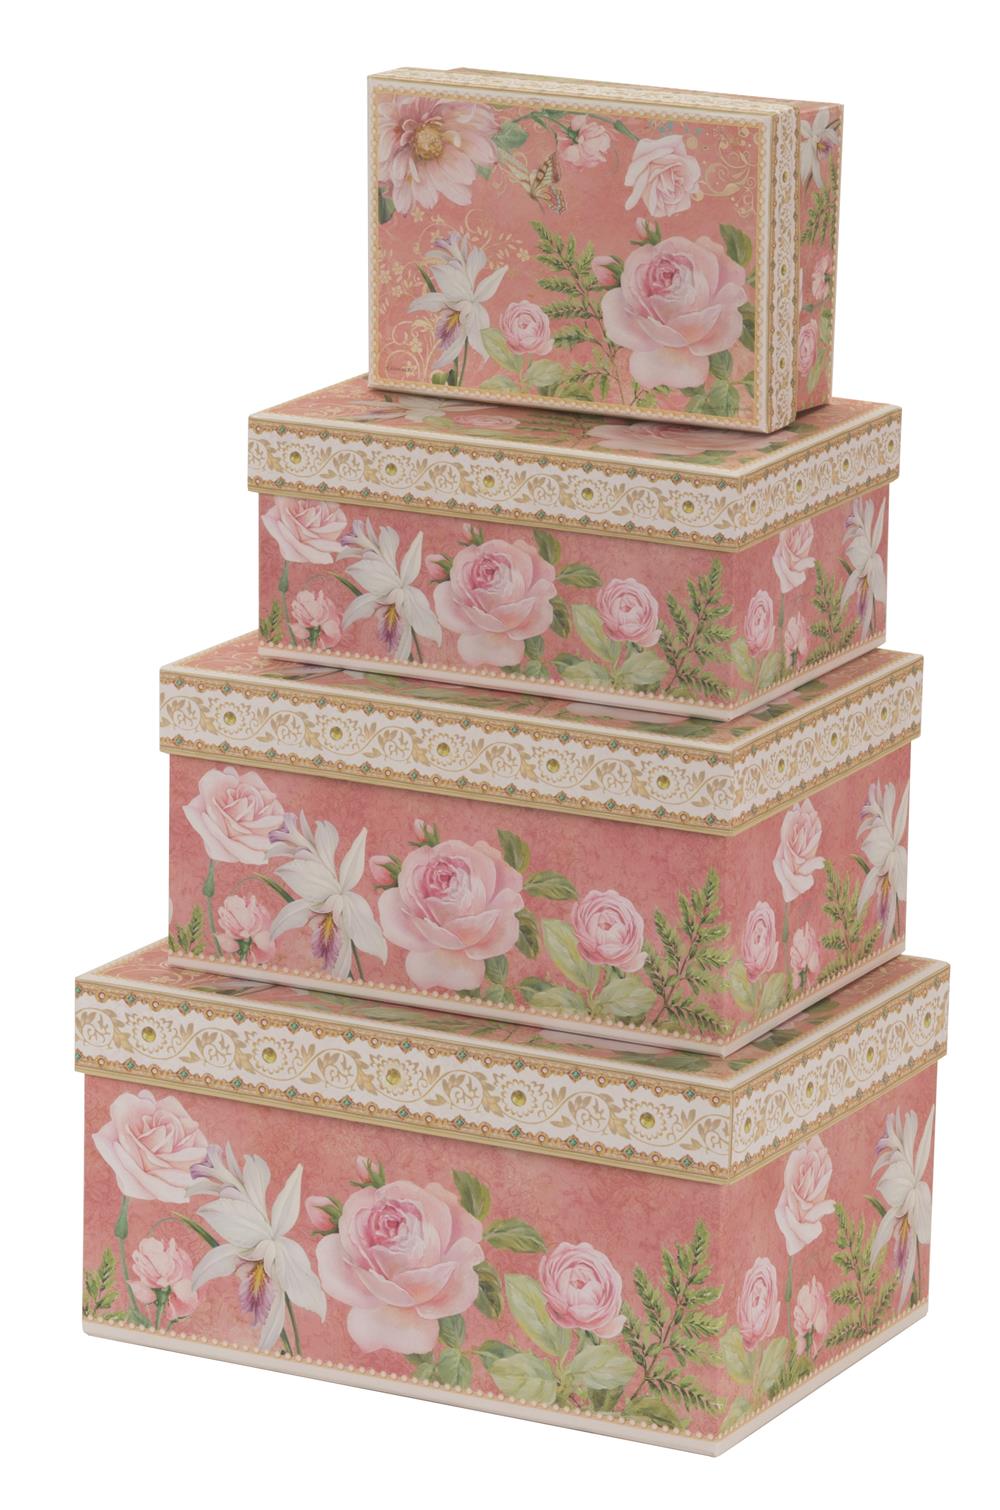 Pink rose design cardboard storage boxes